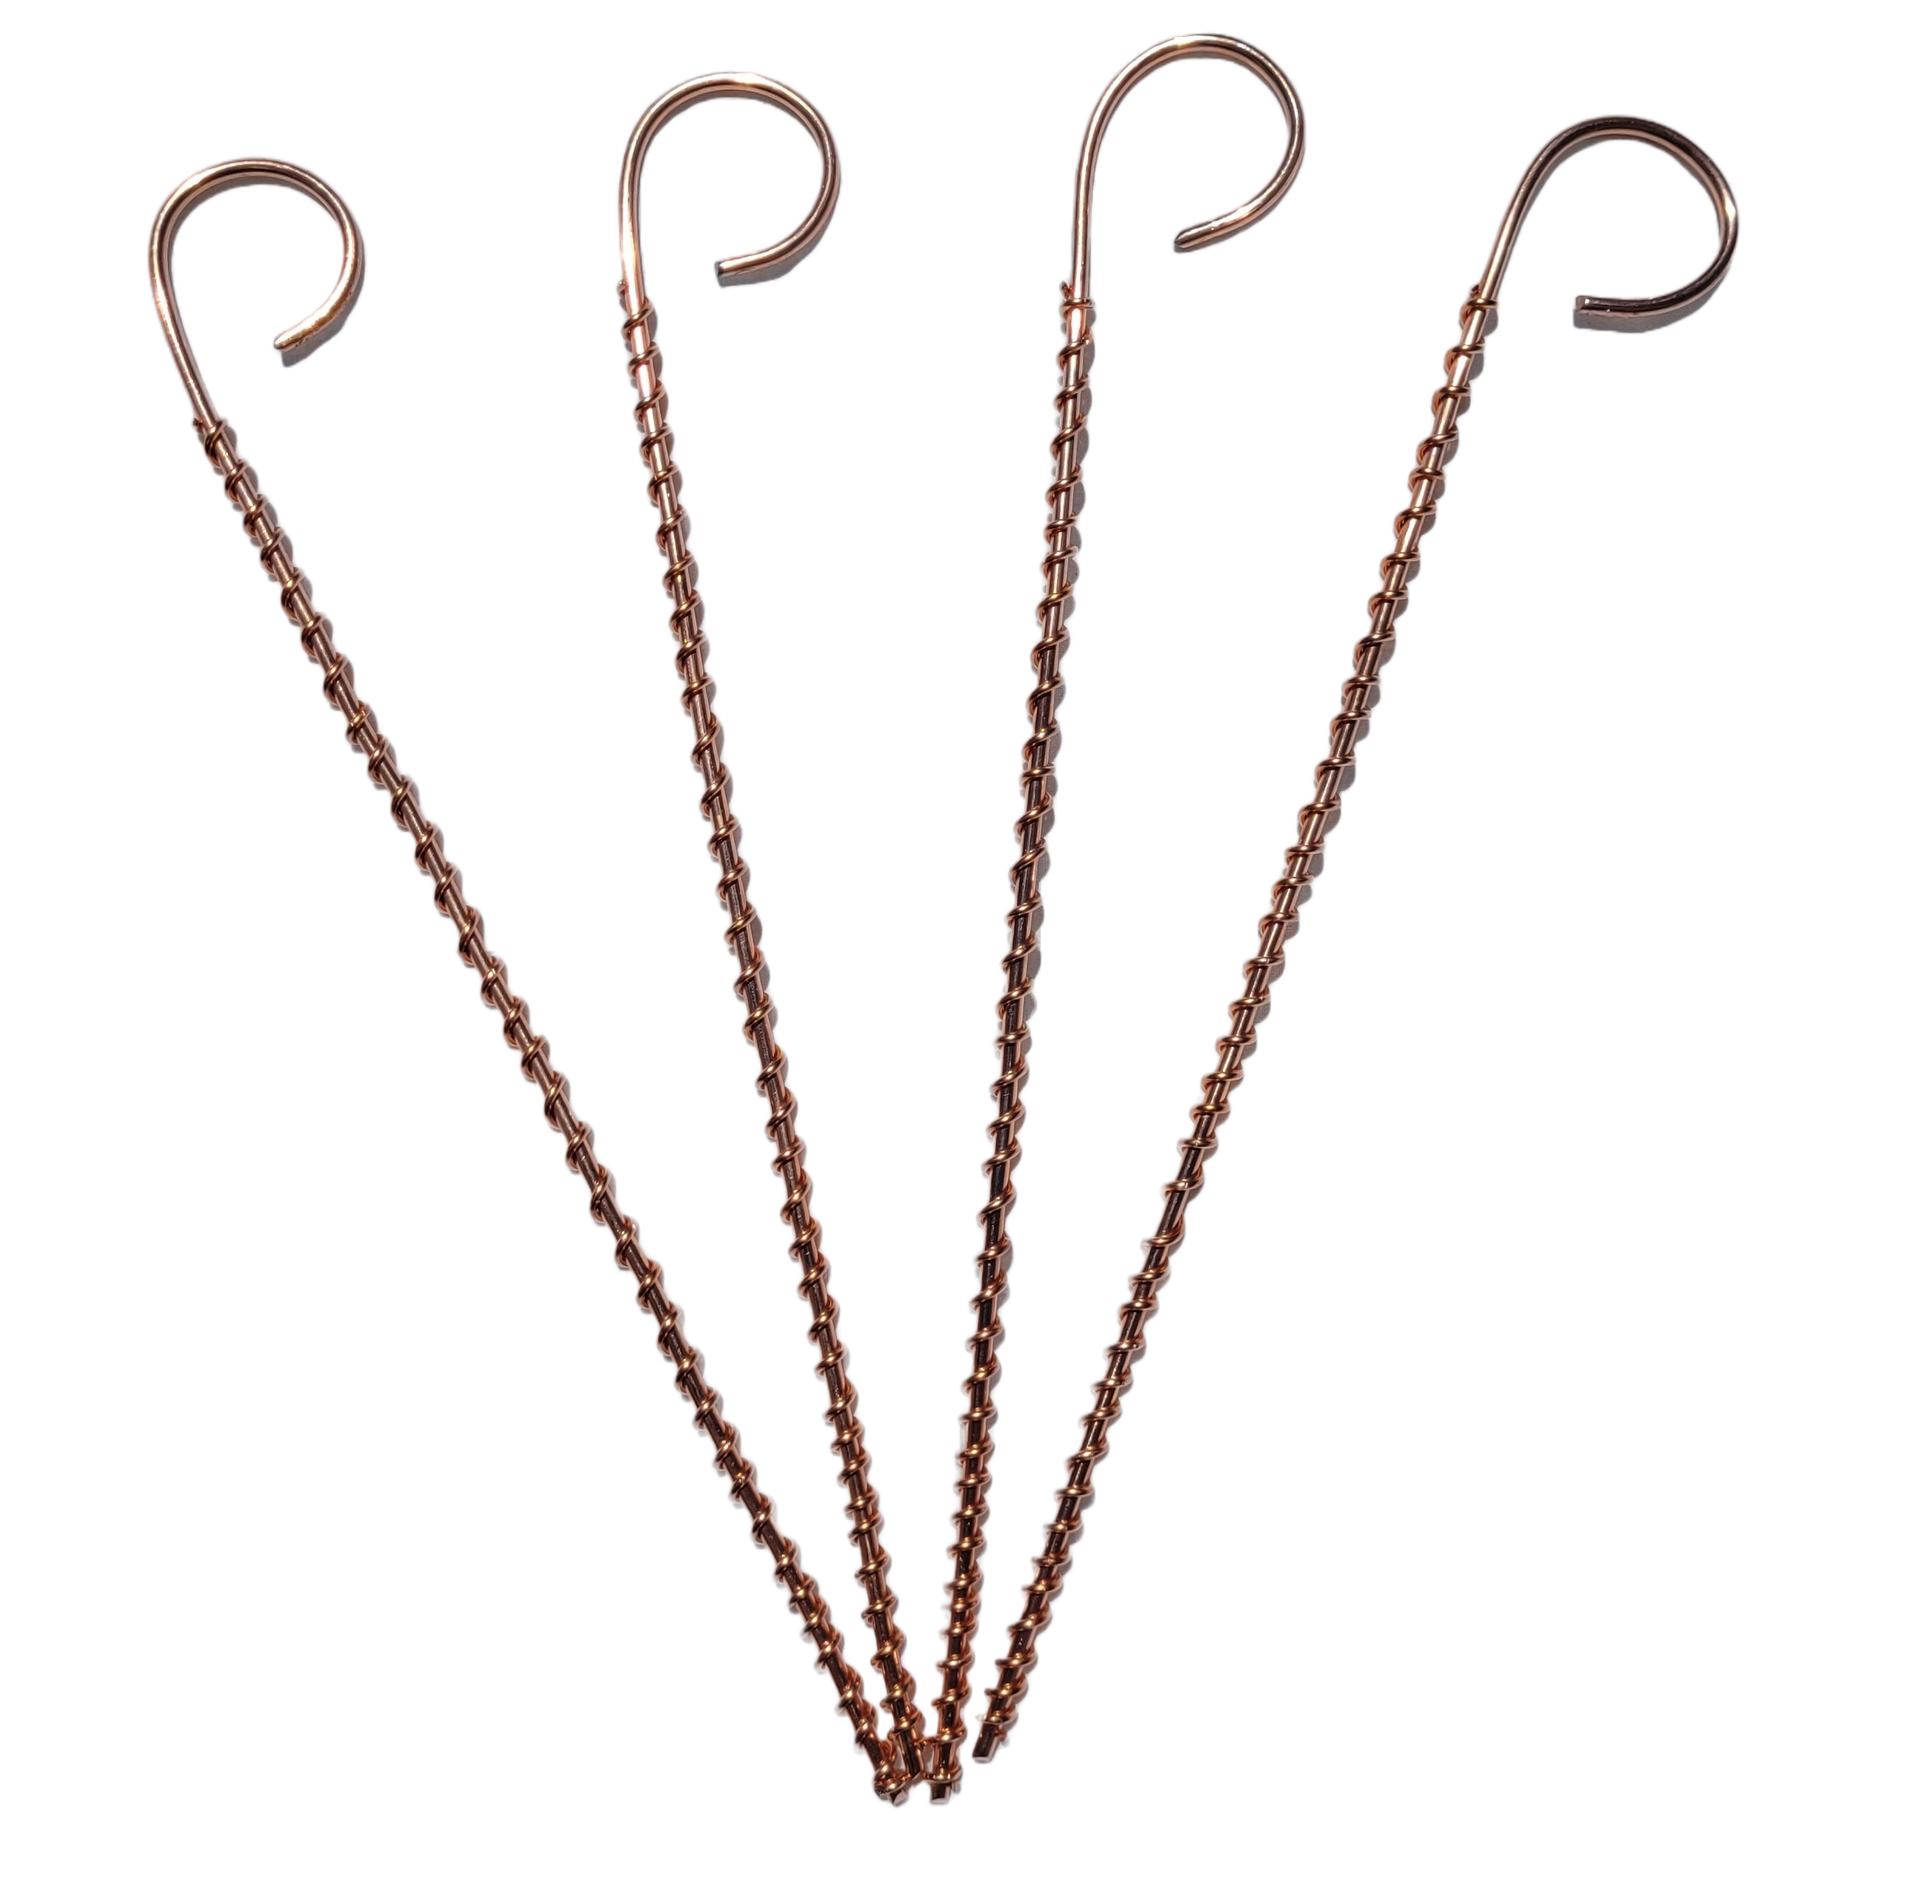 8-Pack Electroculture Copper Gardening Antenna - 99.9% Pure Copper